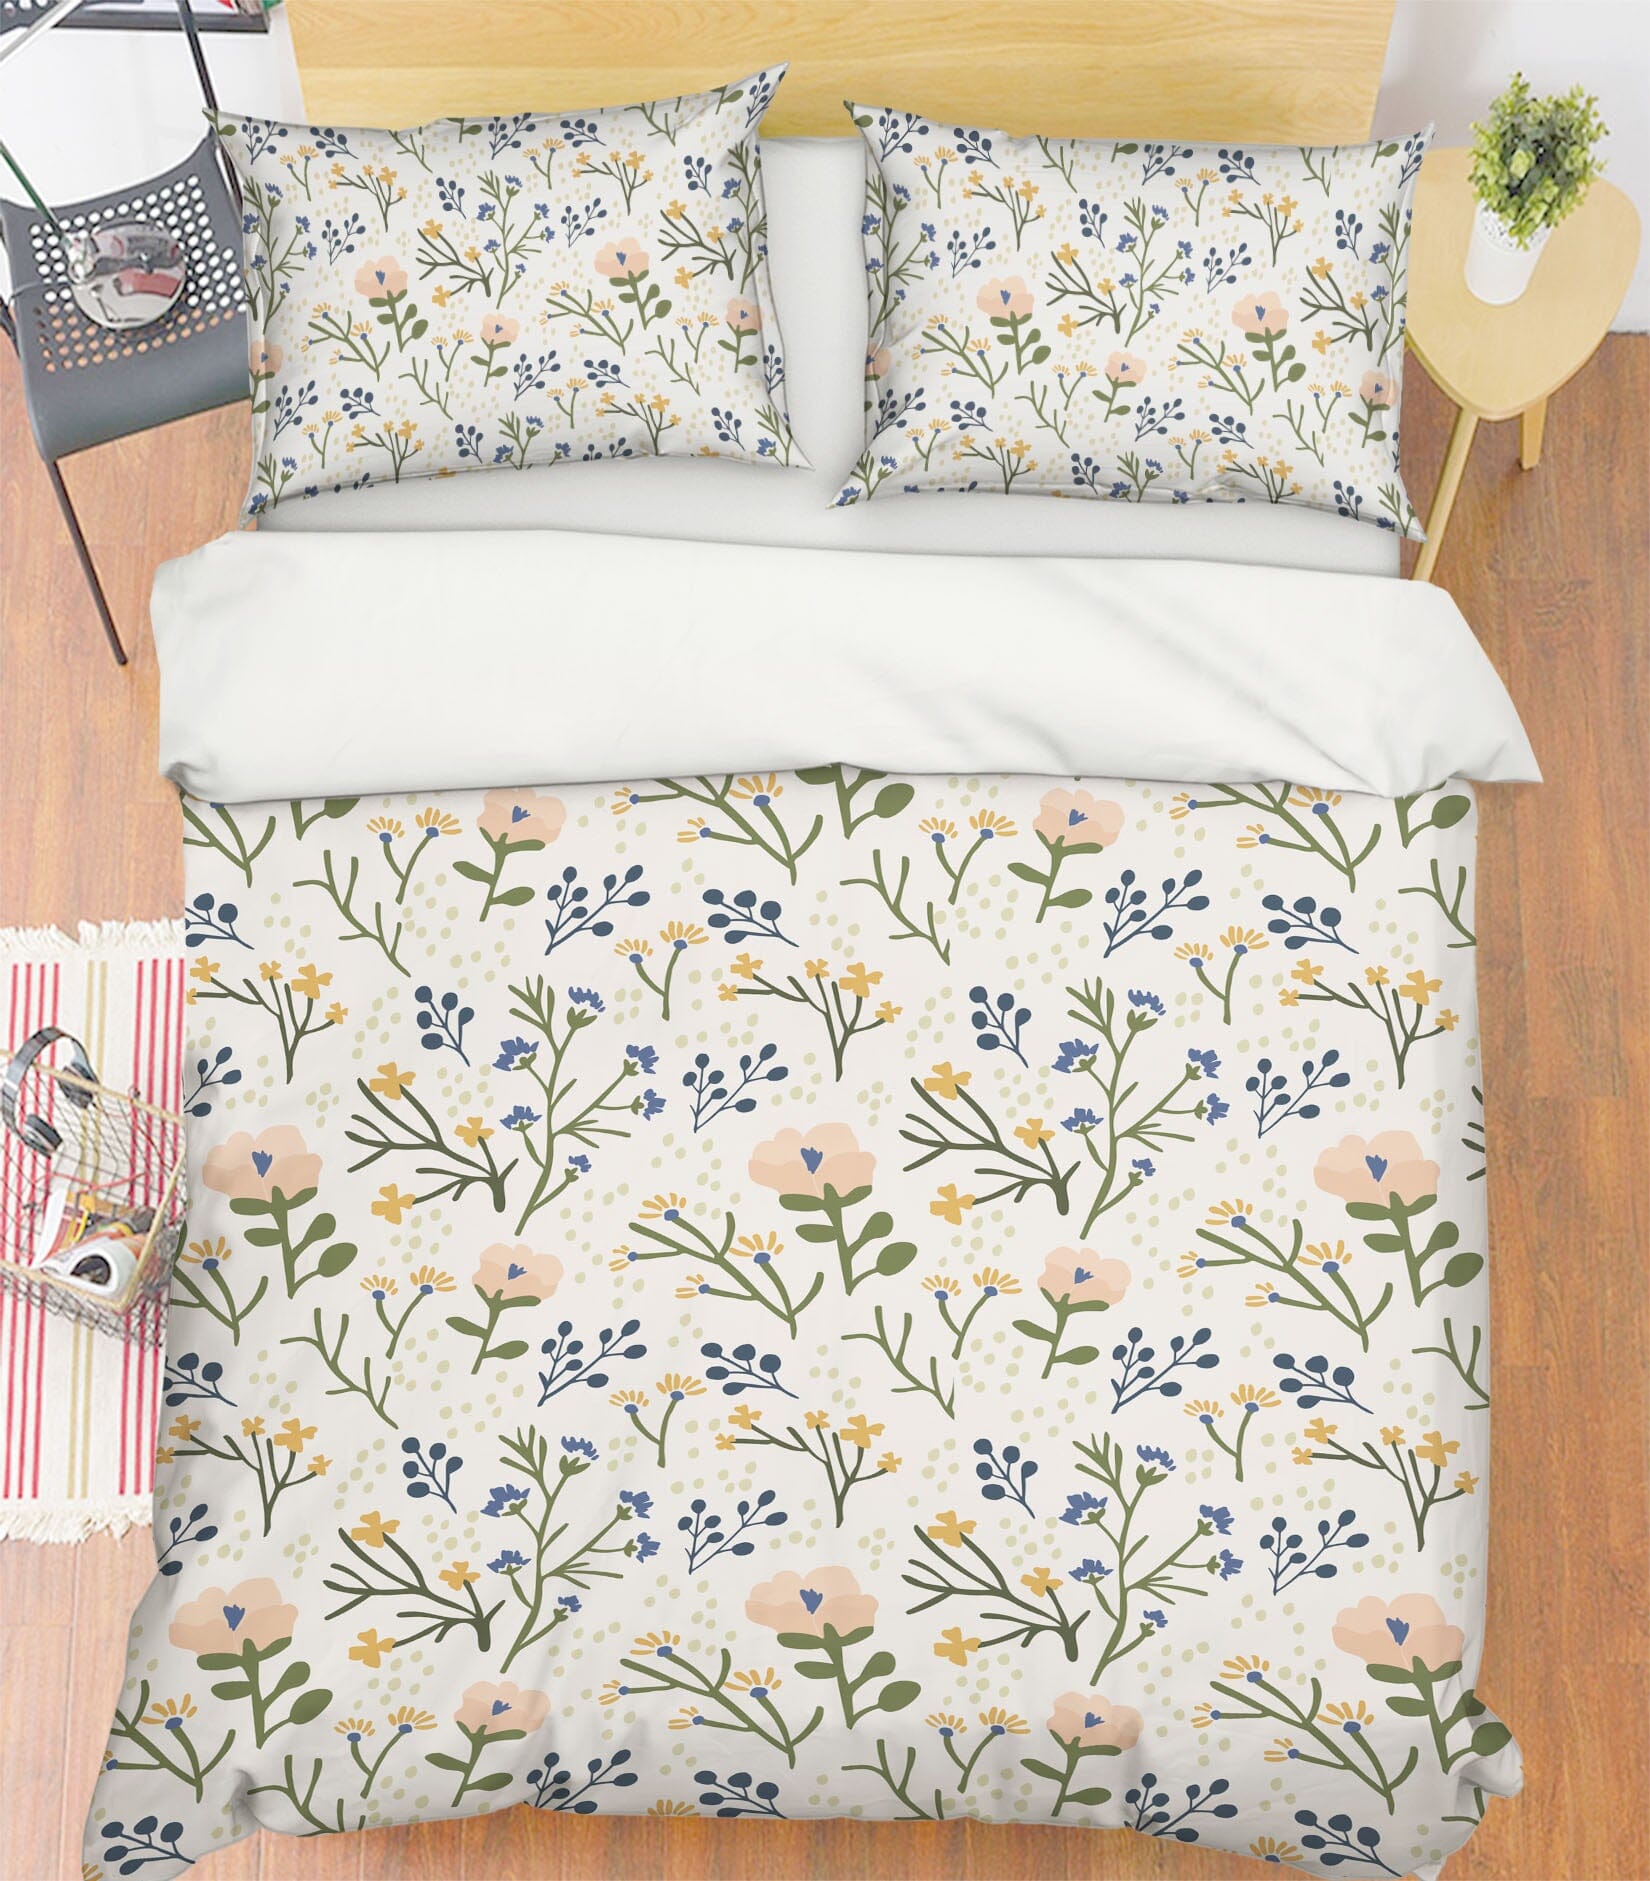 3D Colored Flowers 2109 Jillian Helvey Bedding Bed Pillowcases Quilt Quiet Covers AJ Creativity Home 